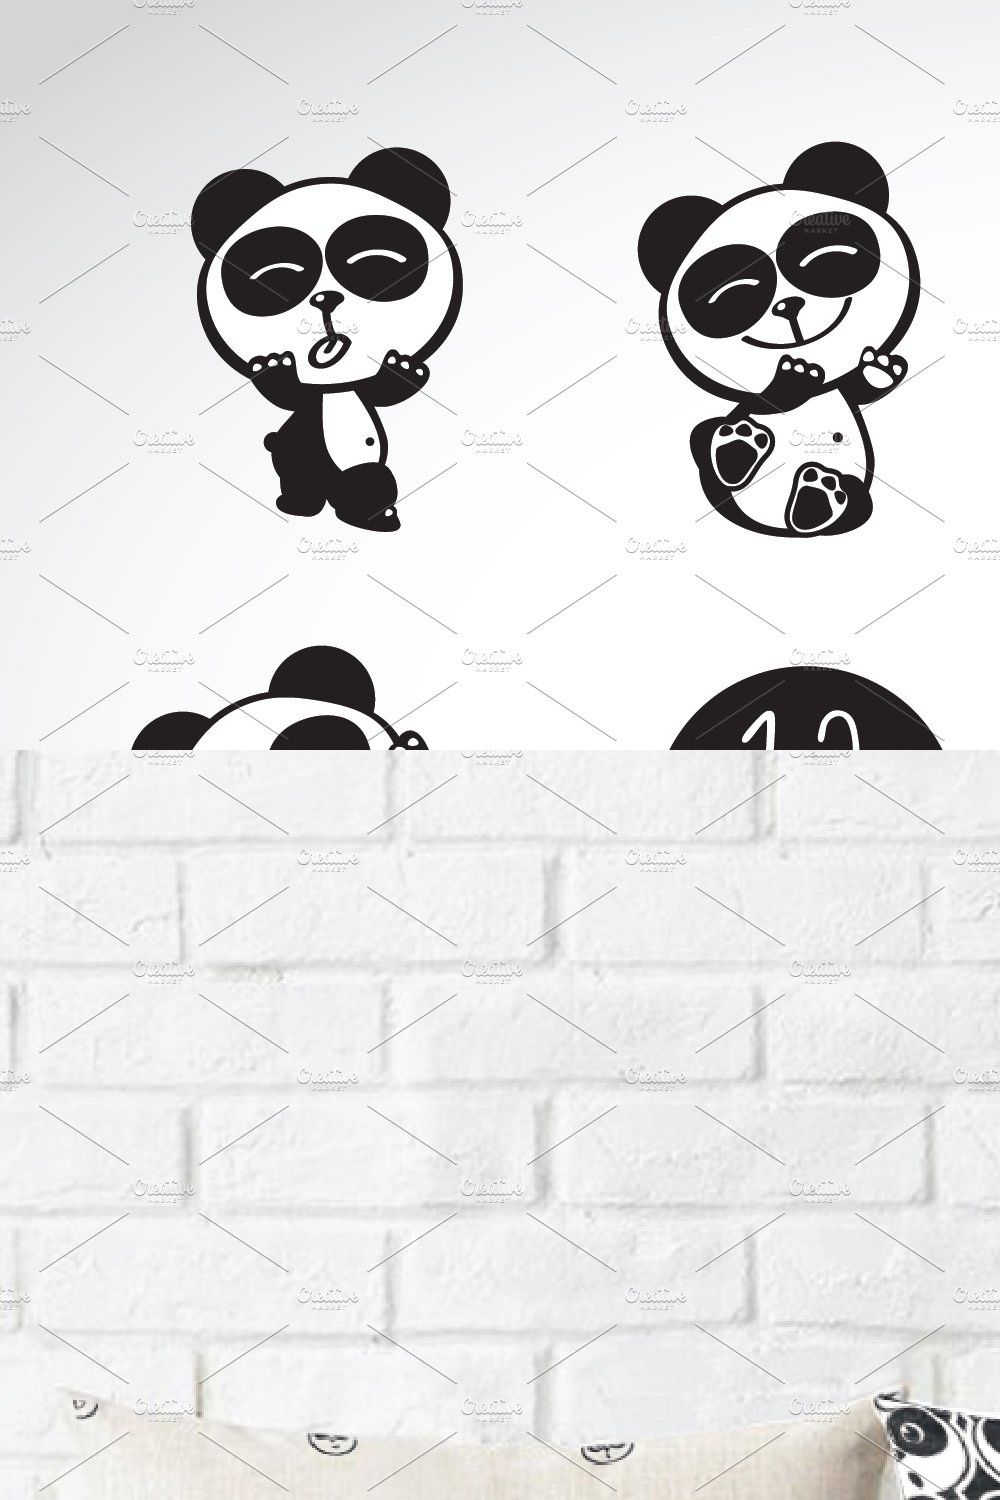 Happy panda (2 sets + 4 pattern) pinterest preview image.